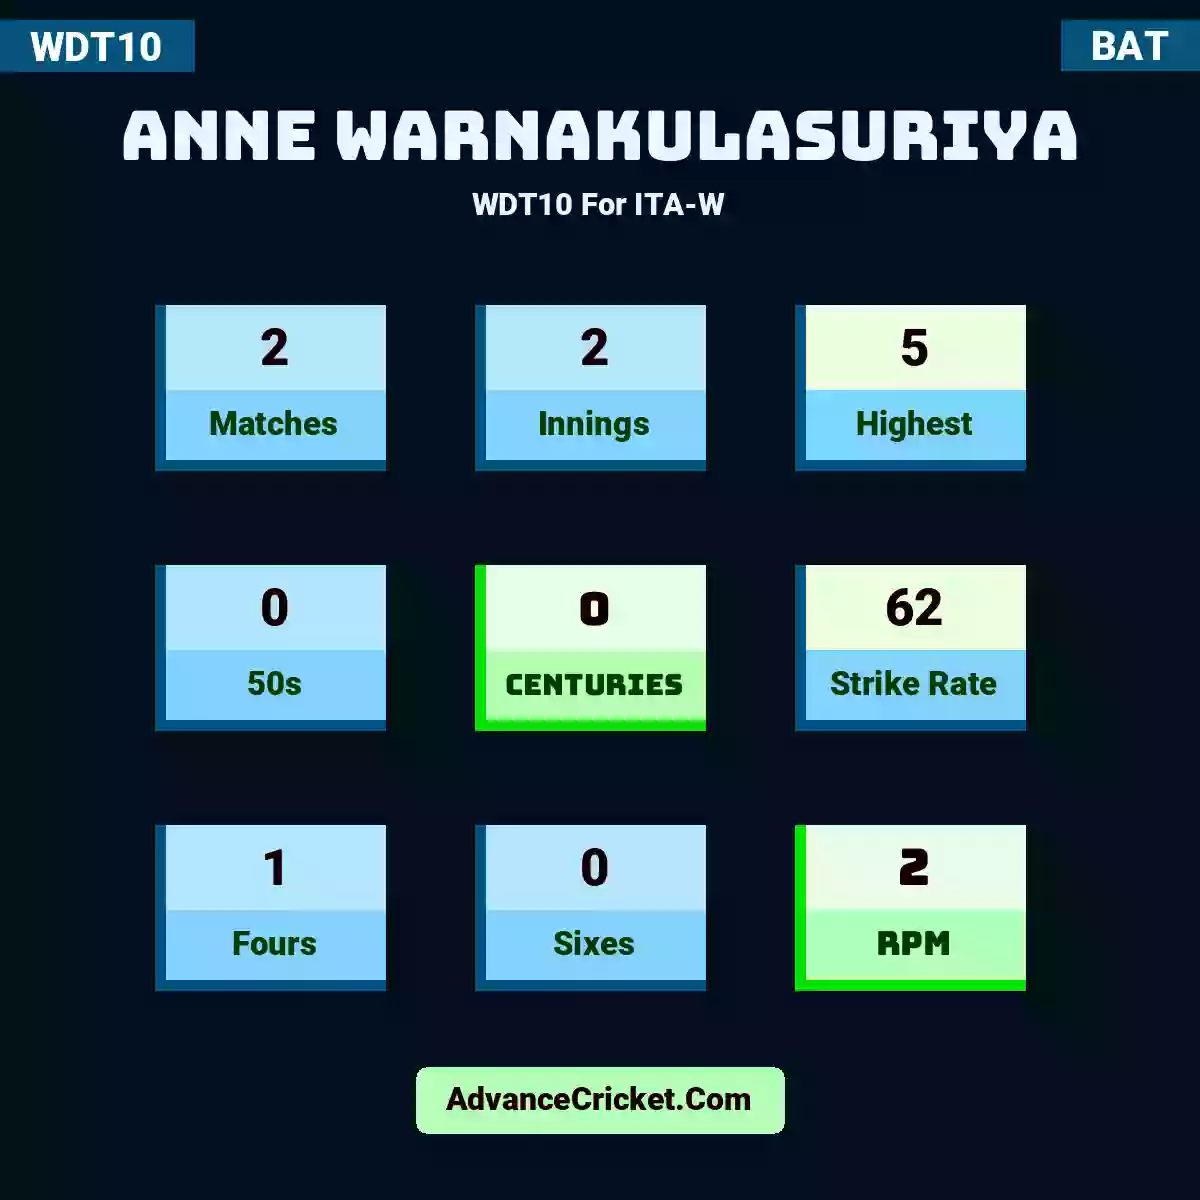 Anne Warnakulasuriya WDT10  For ITA-W, Anne Warnakulasuriya played 2 matches, scored 5 runs as highest, 0 half-centuries, and 0 centuries, with a strike rate of 62. A.Warnakulasuriya hit 1 fours and 0 sixes, with an RPM of 2.